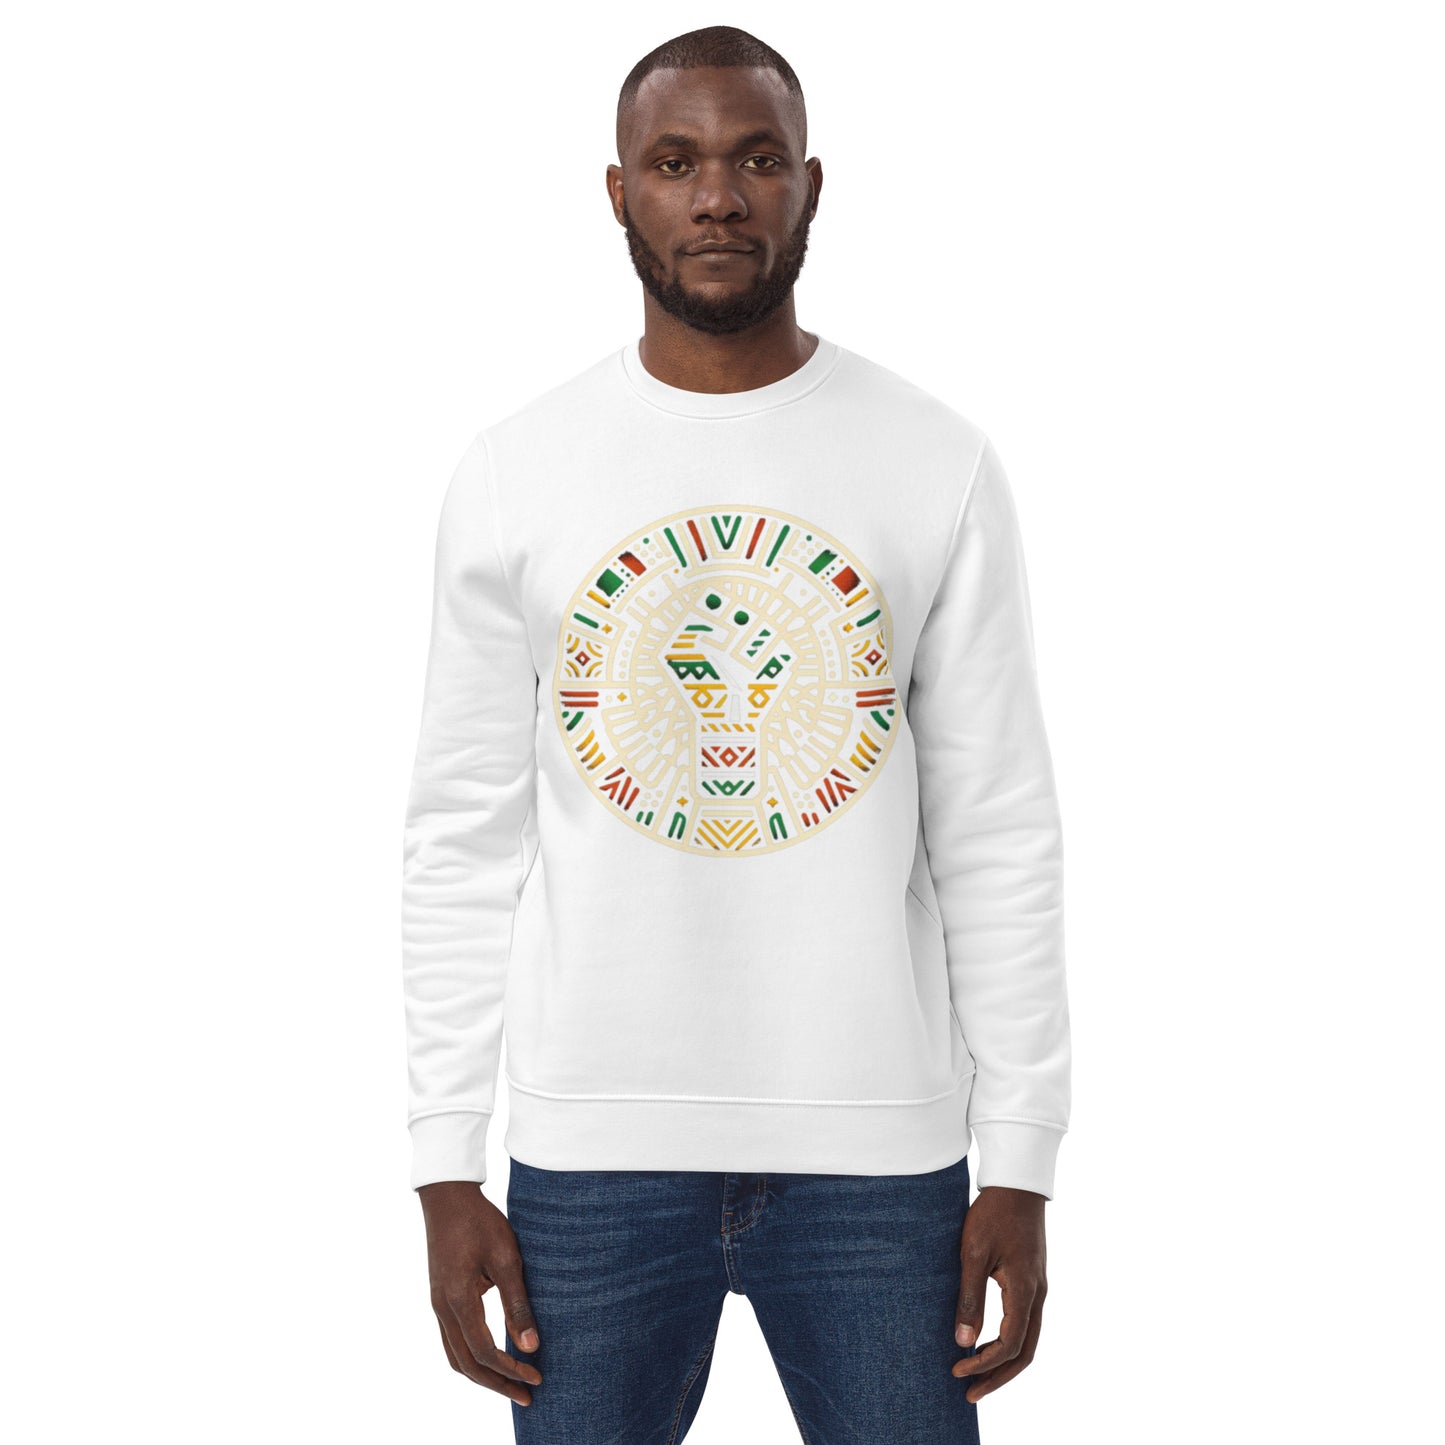 FE027 - Unisex Bio-Pullover - Sweater - Sweatshirt - Free Africa 2